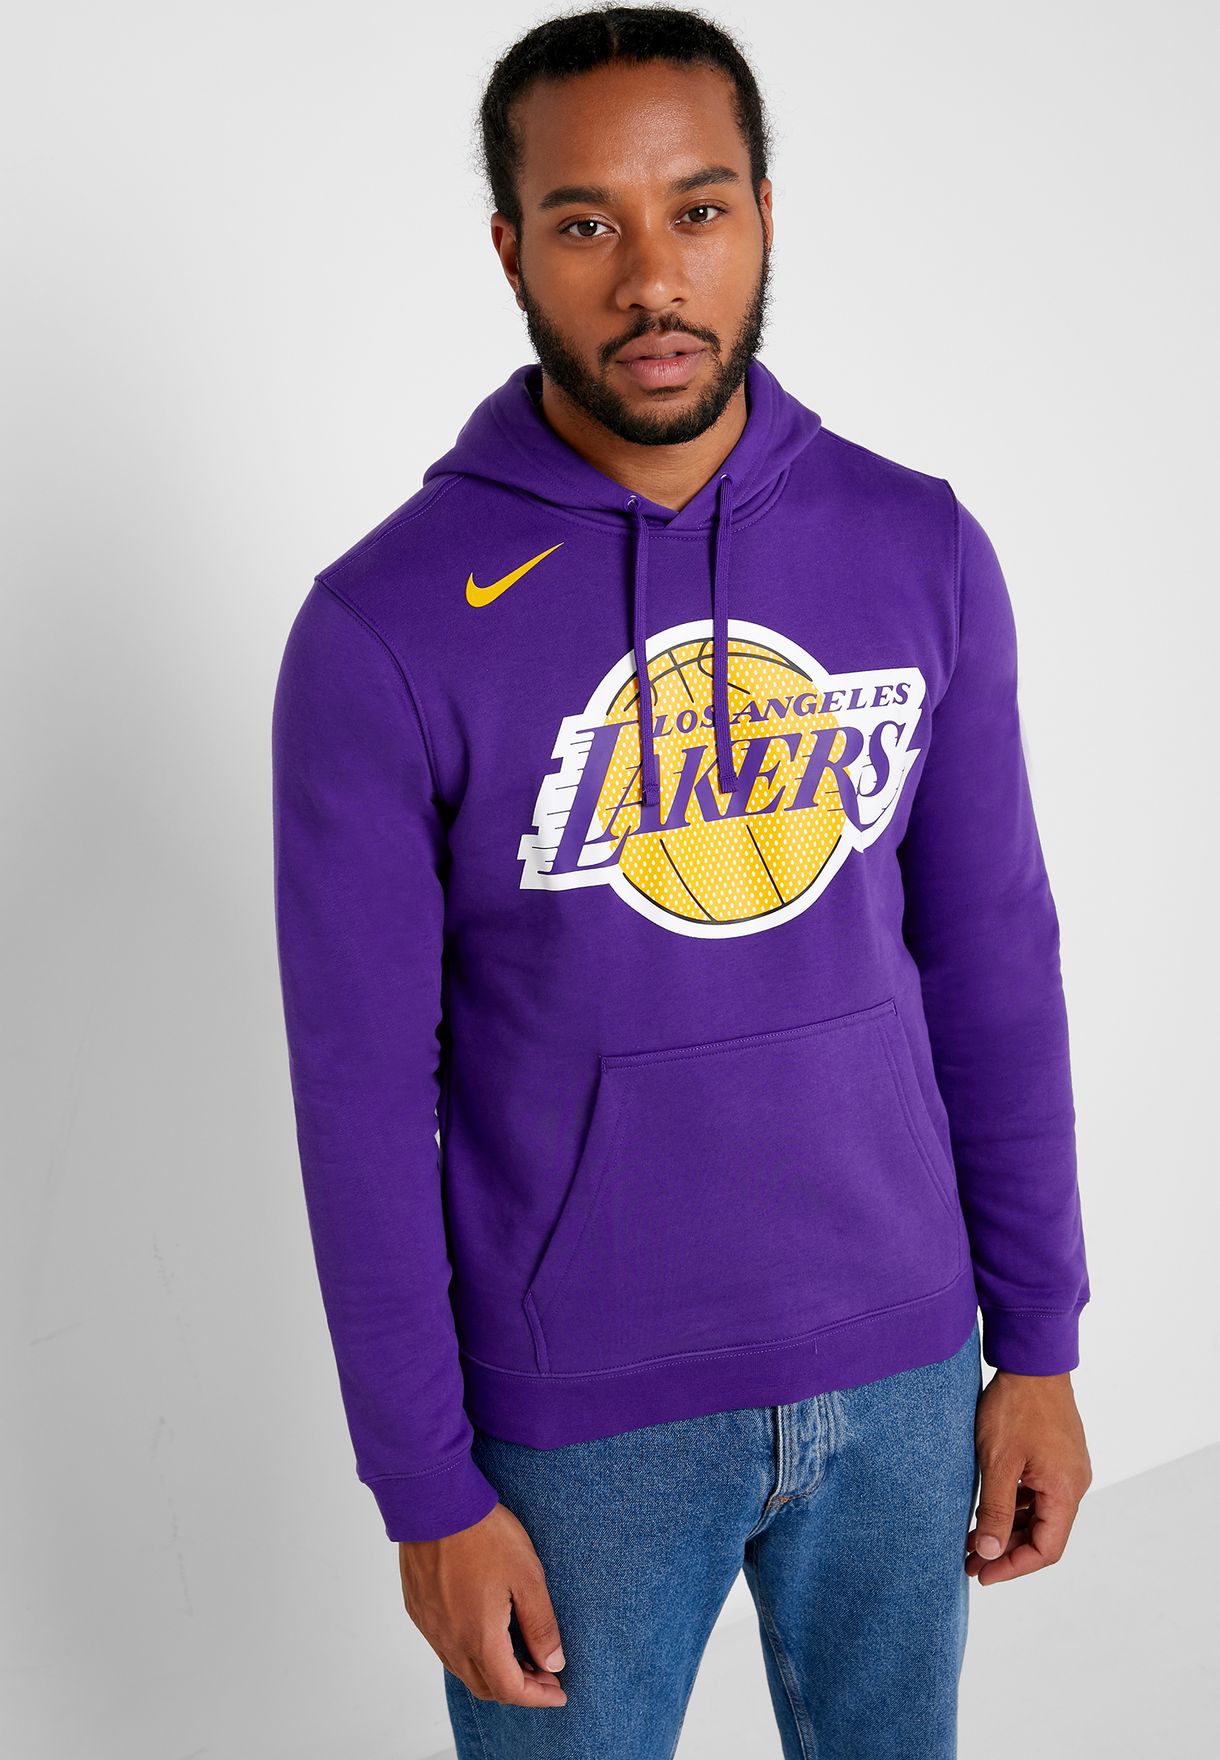 Light Purple Lakers Hoodie / Nike Air Jordan Nba Nike Kobe 8 System ...